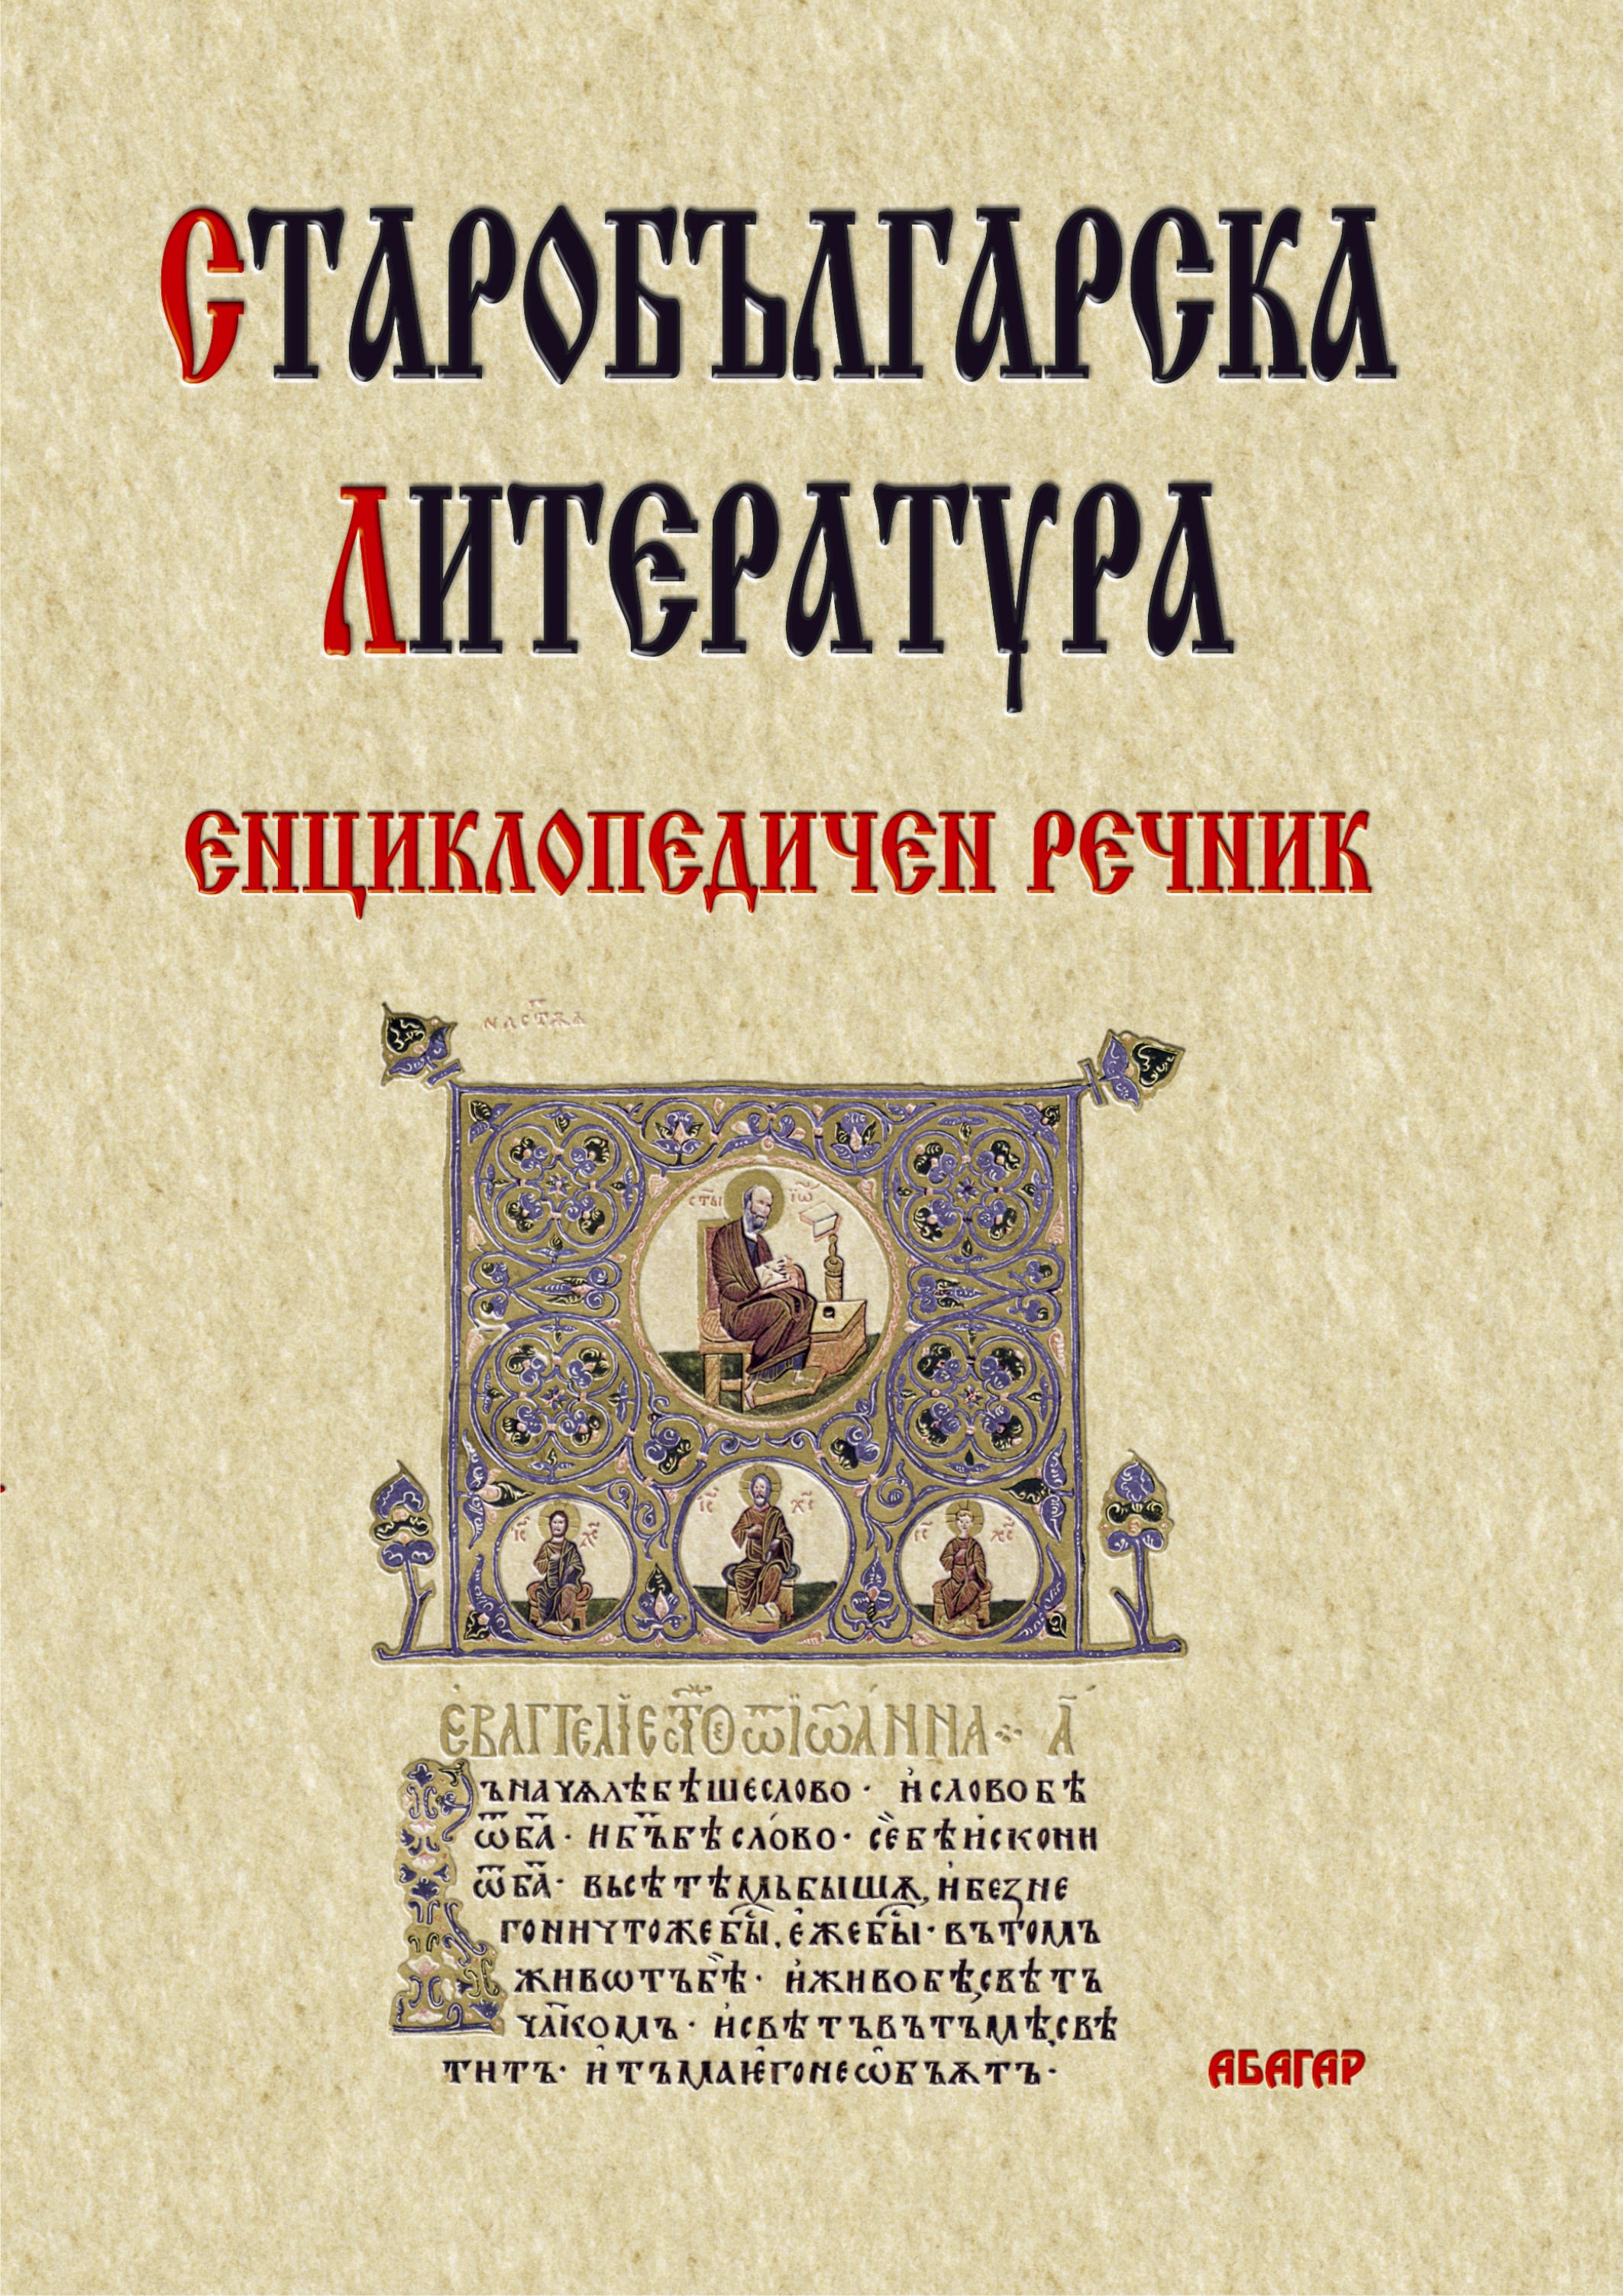 OLD BULGARIAN LITERTURE - Encyclopaedic Dictionary